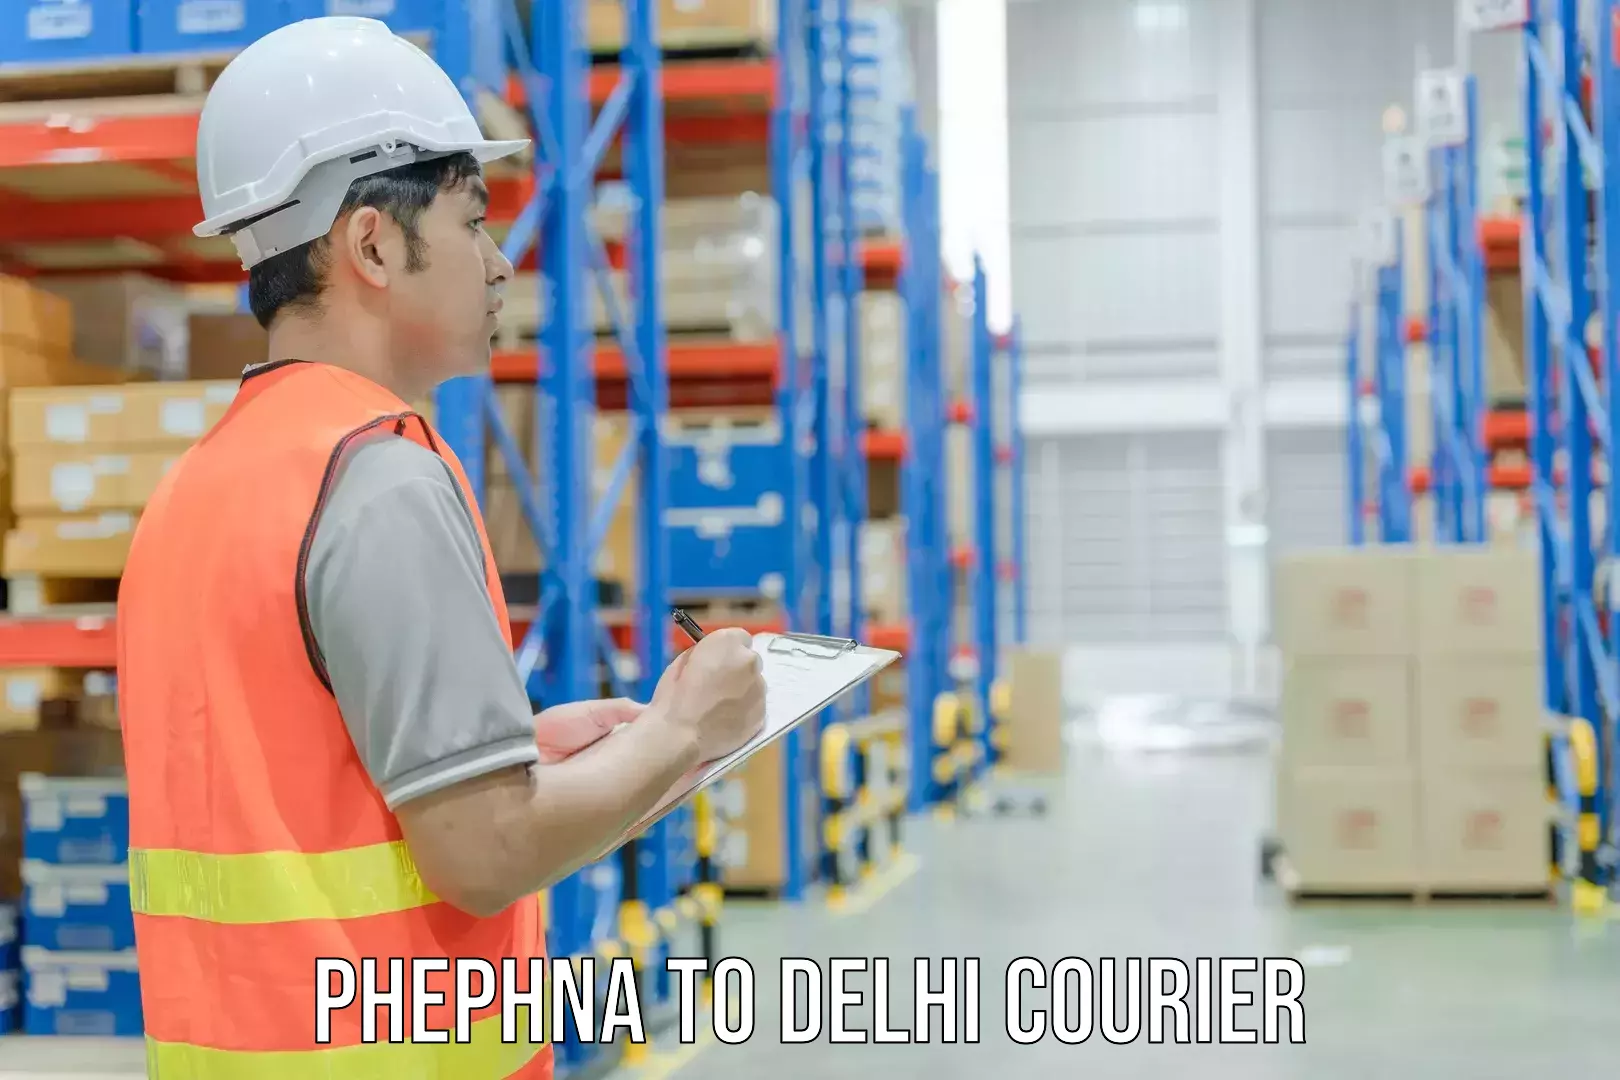 Express delivery capabilities Phephna to East Delhi